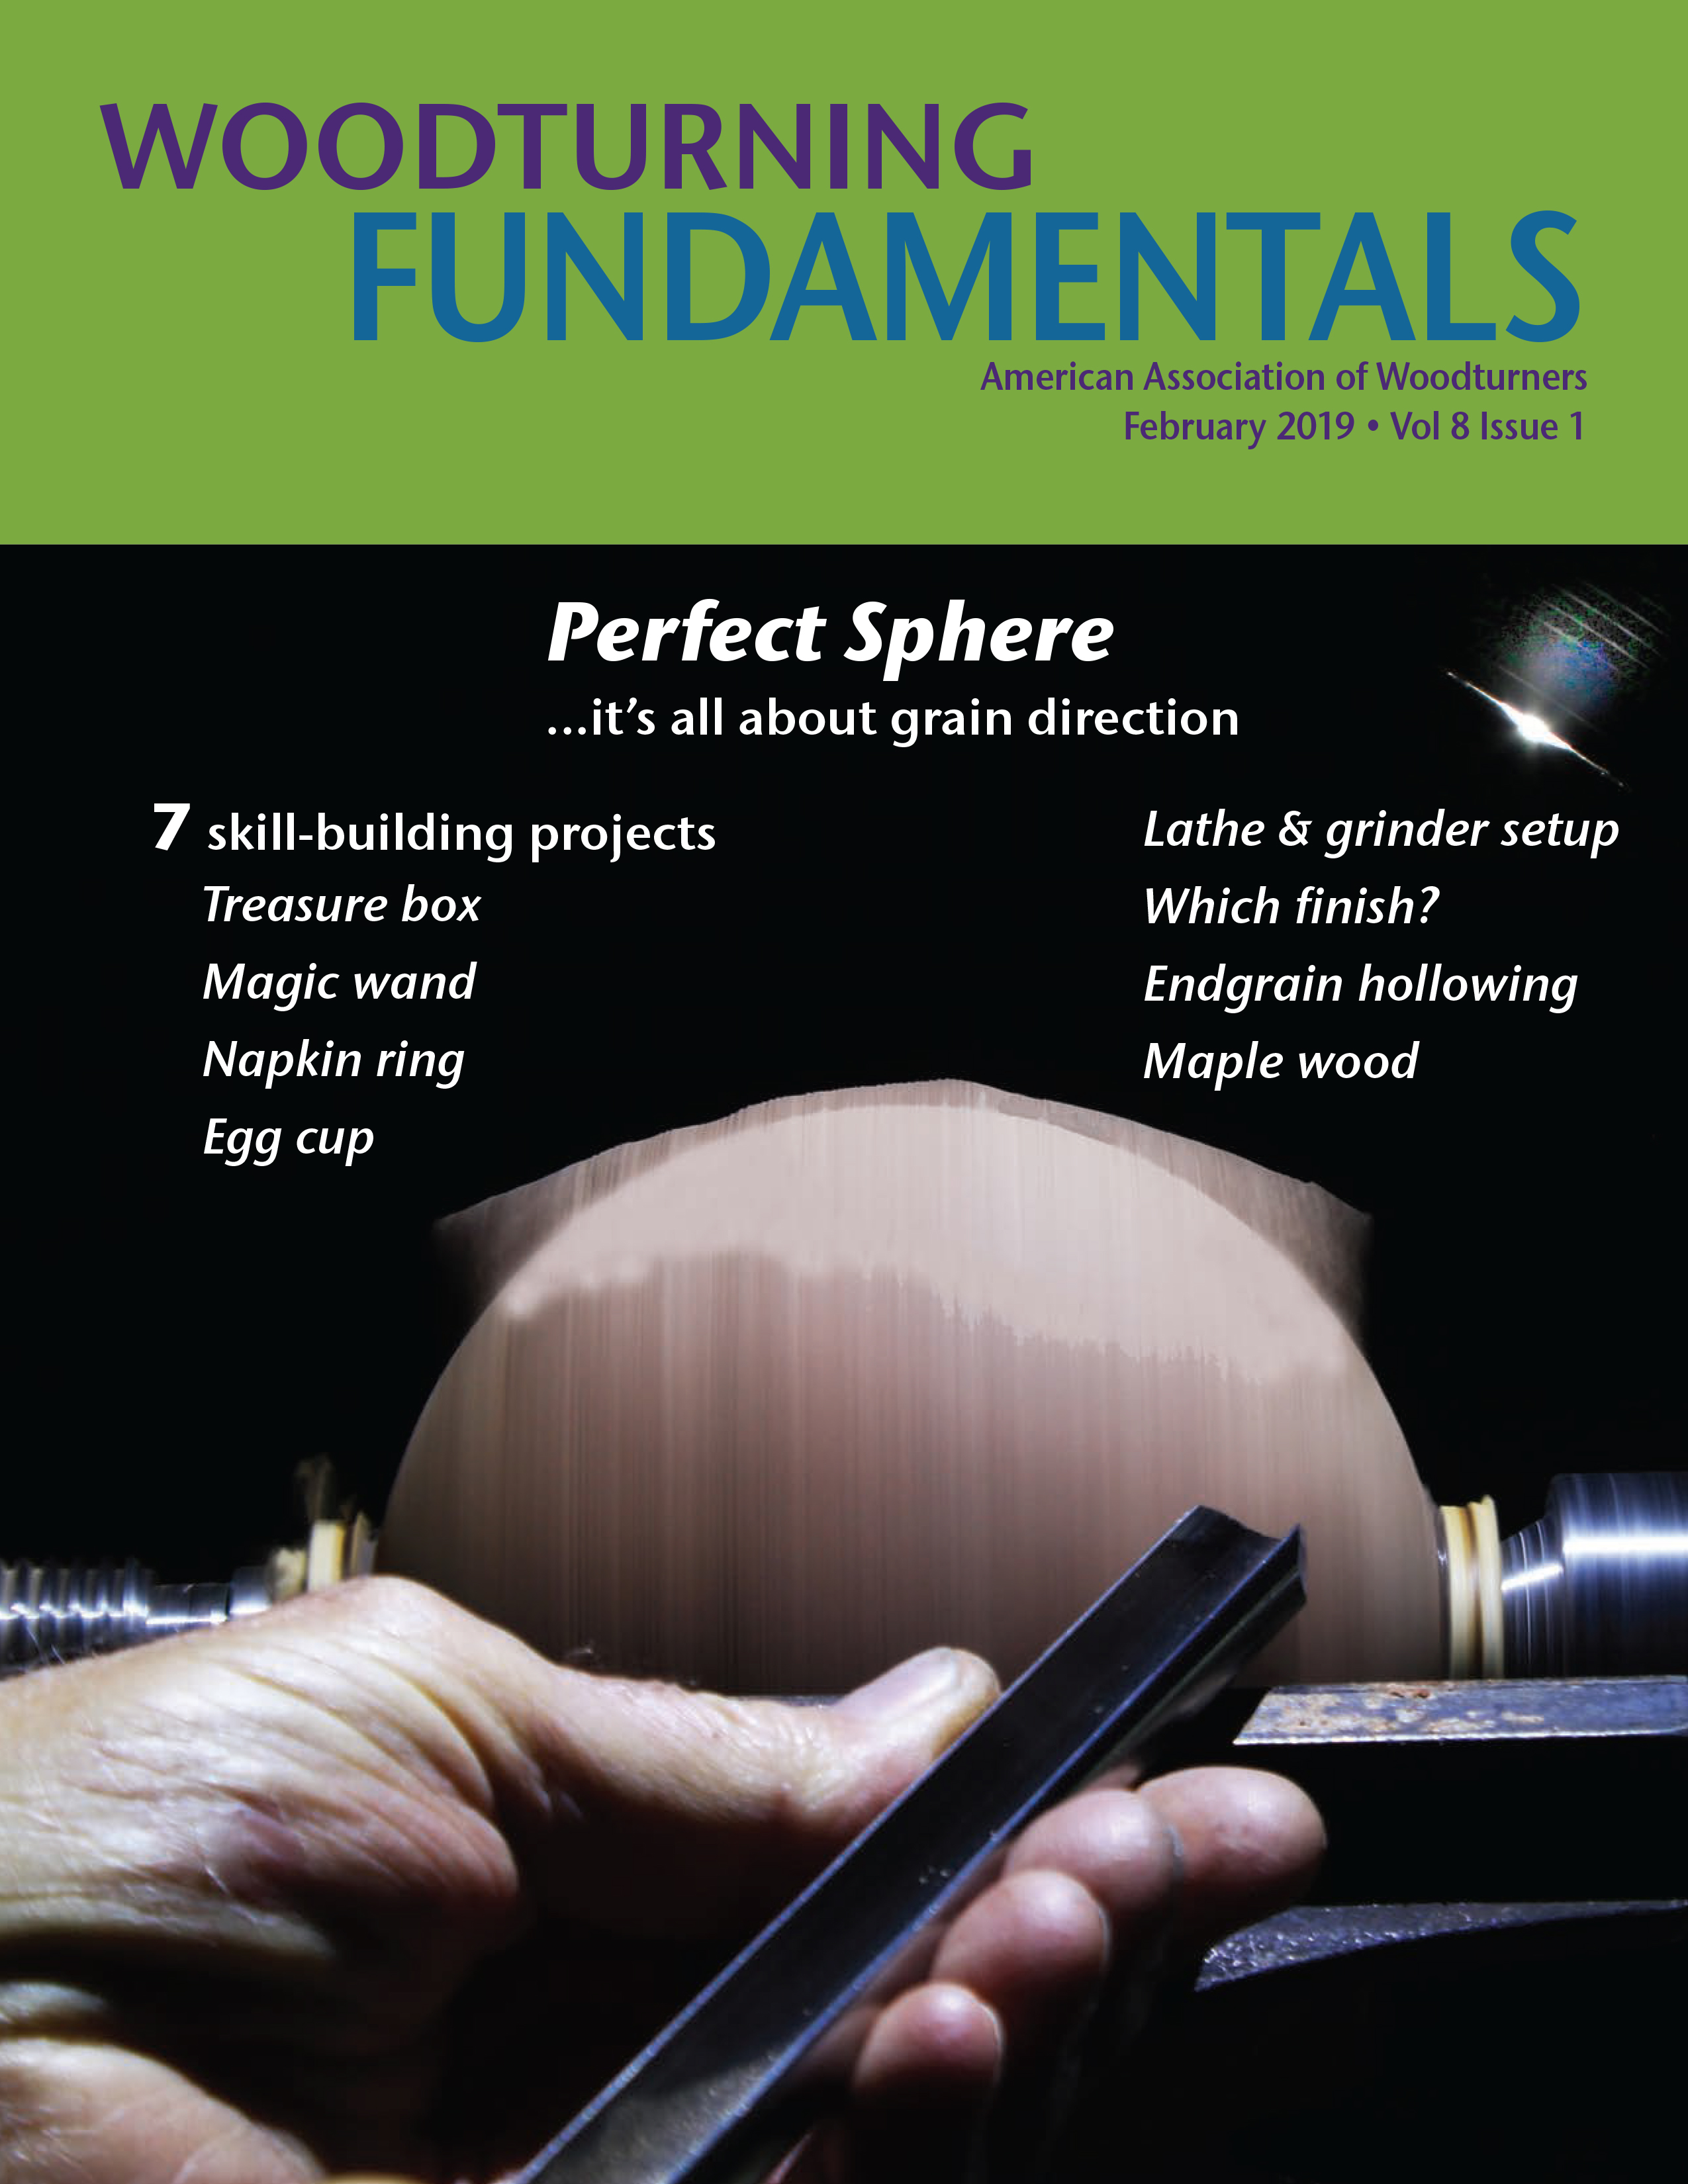 Woodturning Fundamentals 8 issue 1